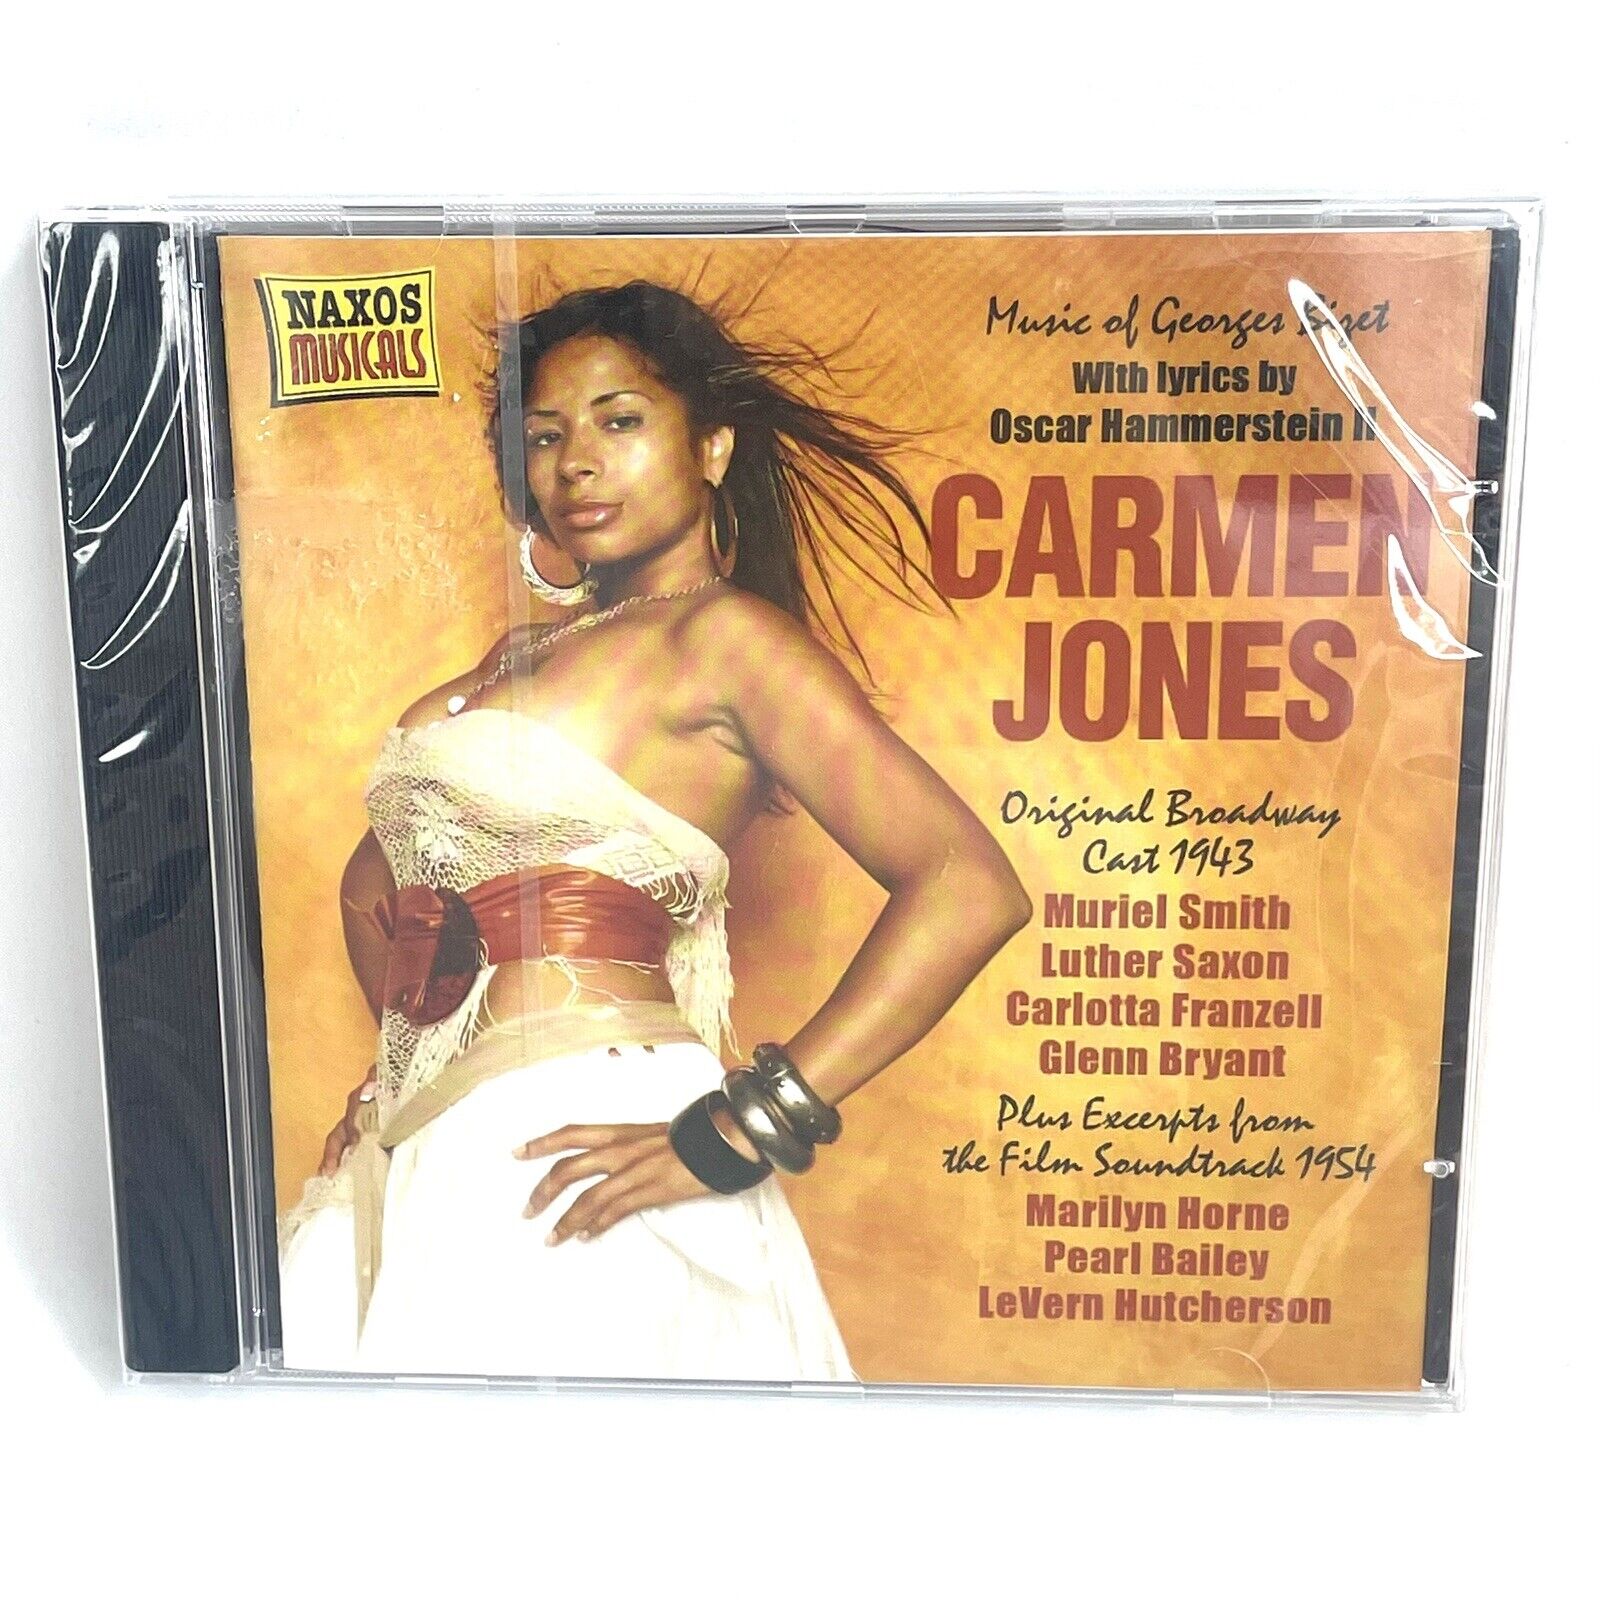 Carmen Jones Original Broadway Cast 1943 New CD Naxos